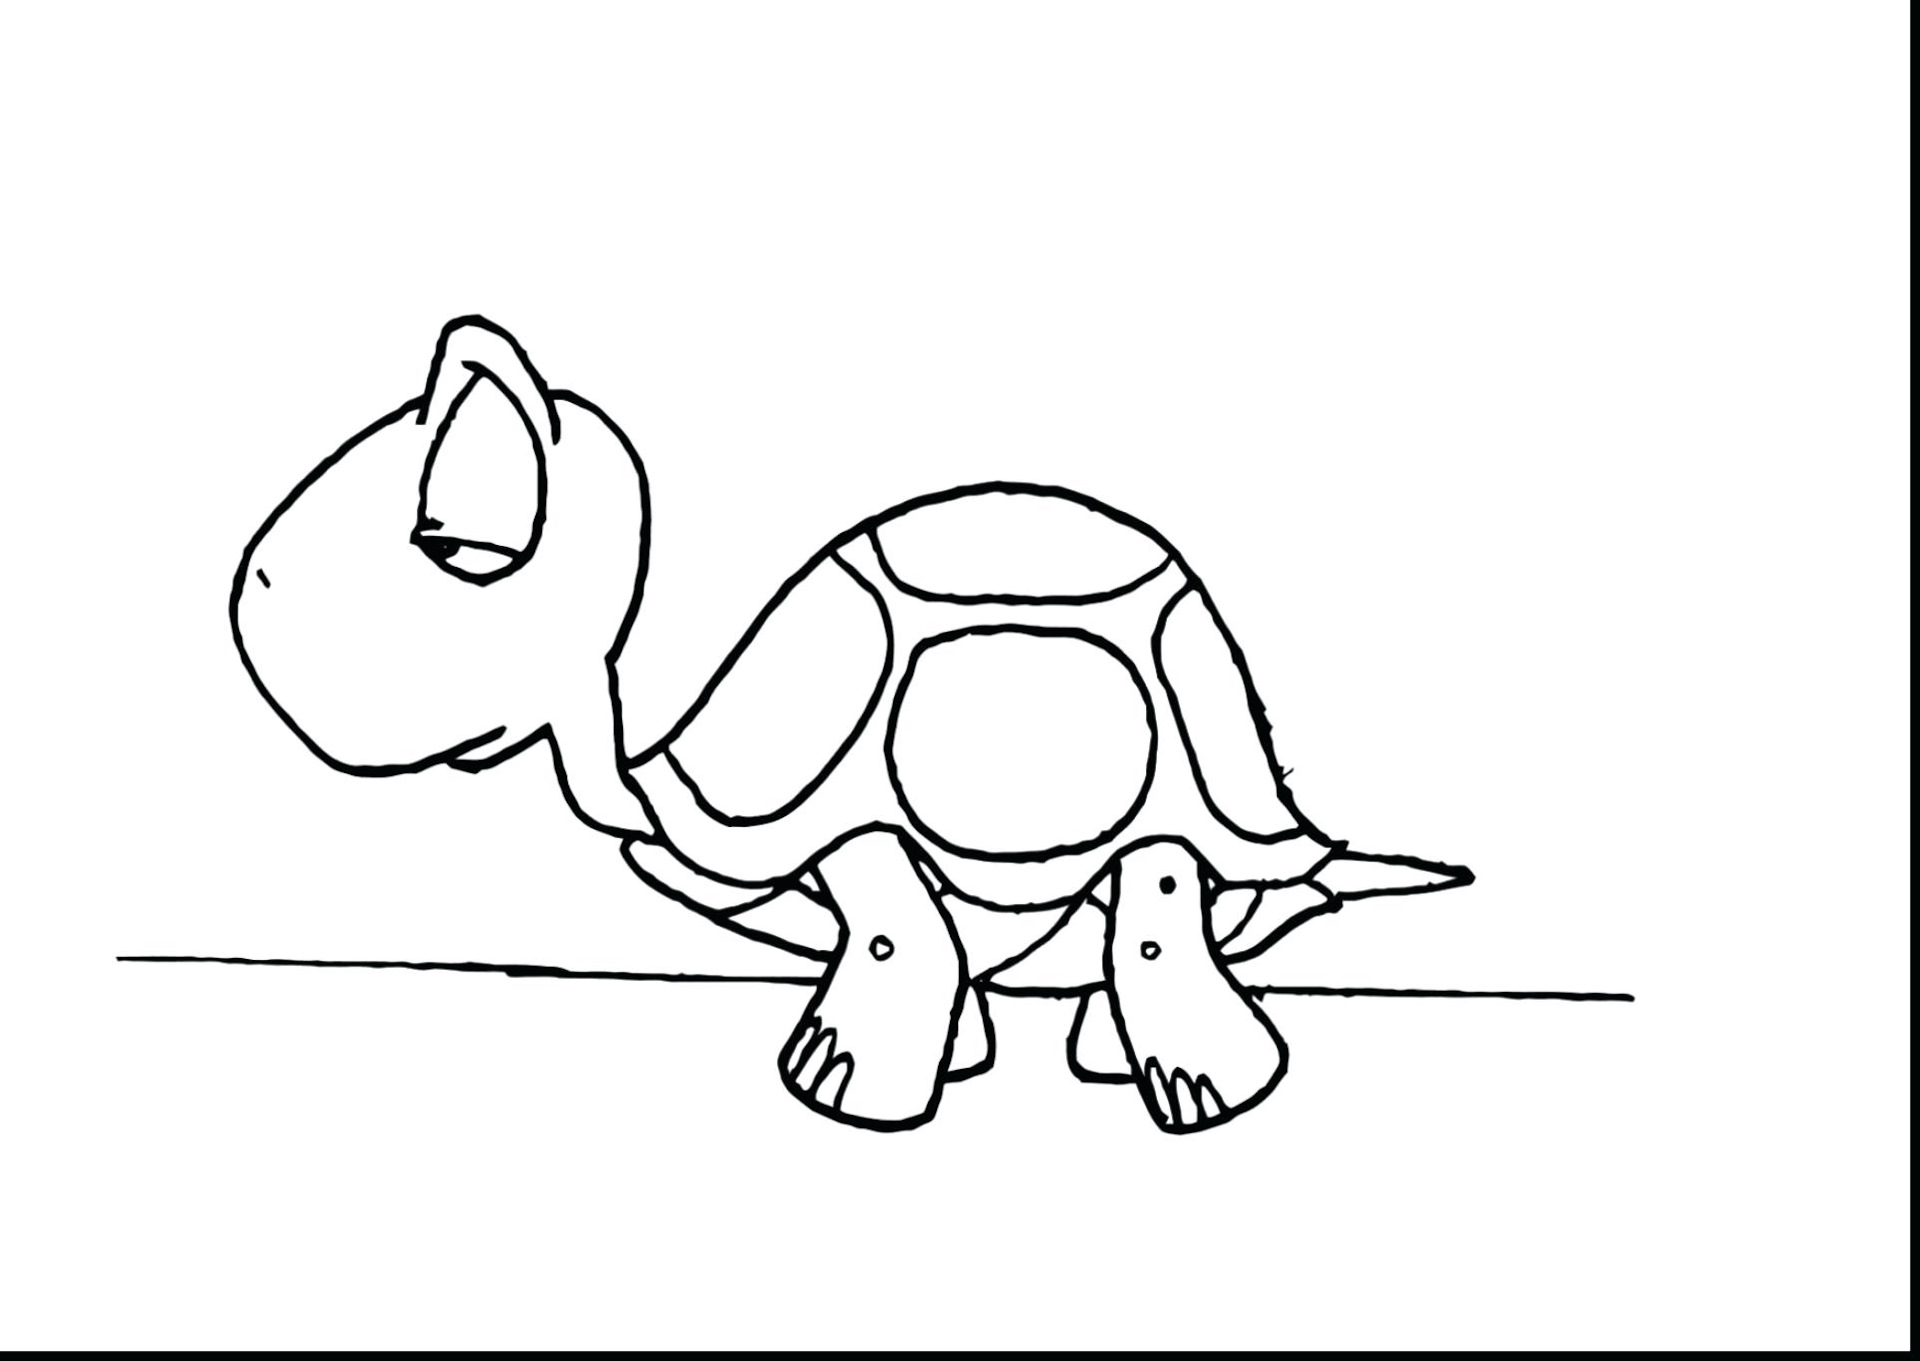 Черепаха медленно ползет. Раскраска черепашка. Черепаха рисунок. Черепаха раскраска для детей. Черепаха рисунок для детей карандашом.